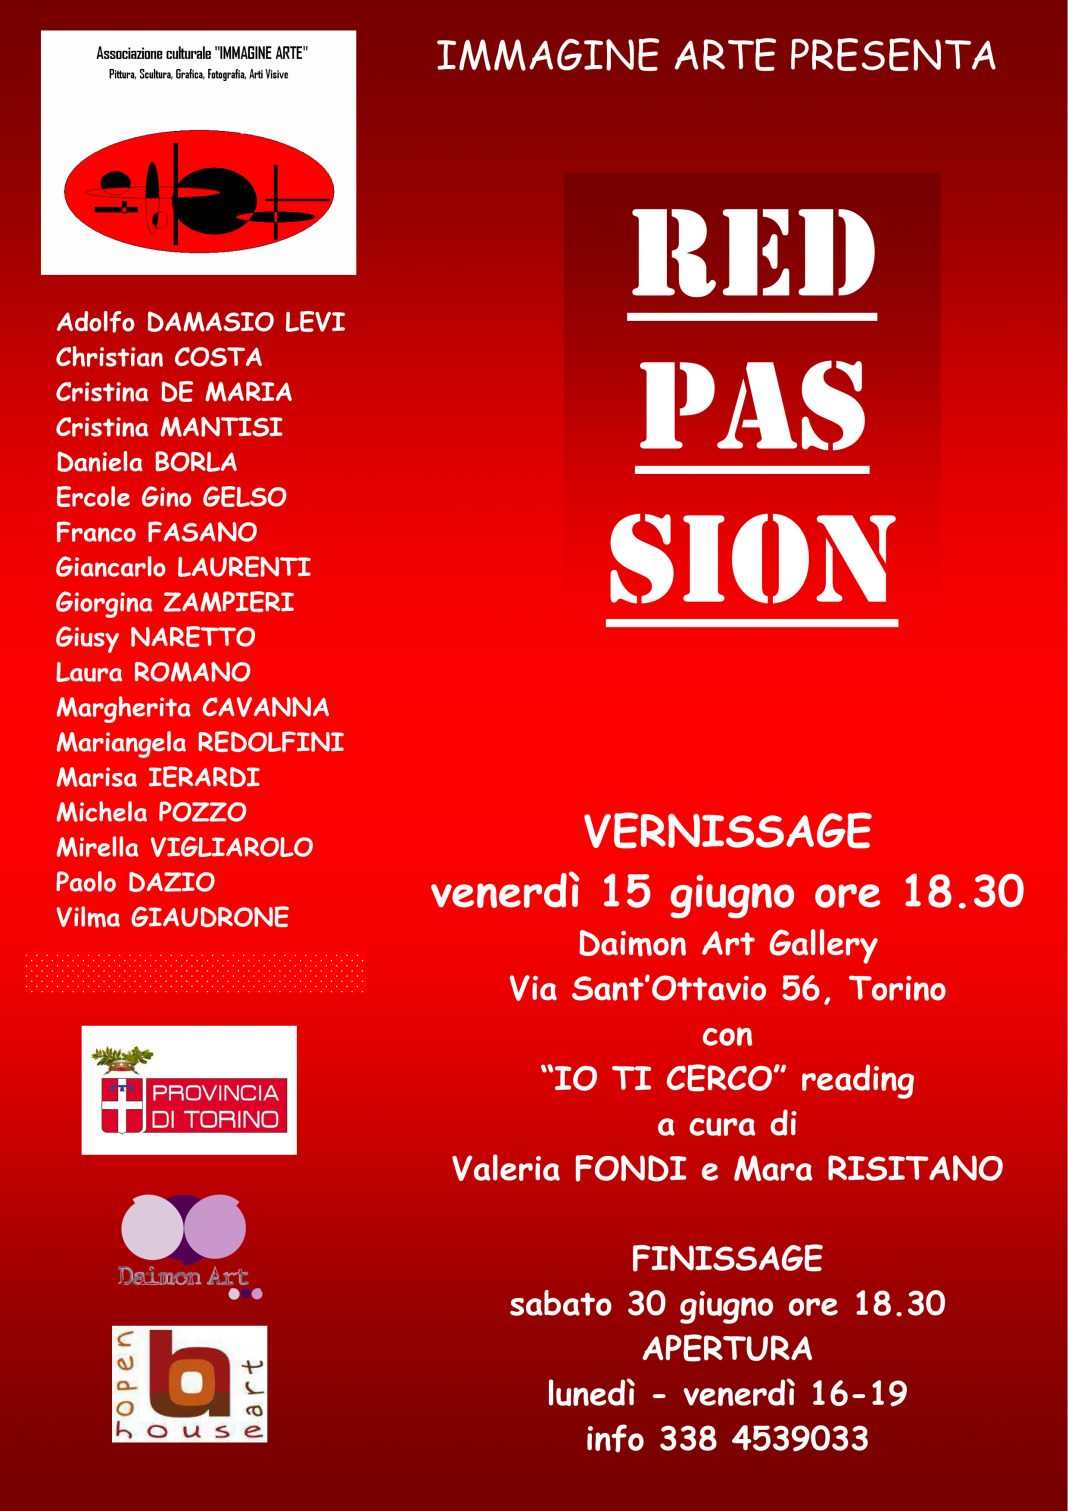 Red Passionhttps://www.exibart.com/repository/media/eventi/2012/06/red-passion-1068x1511.jpg